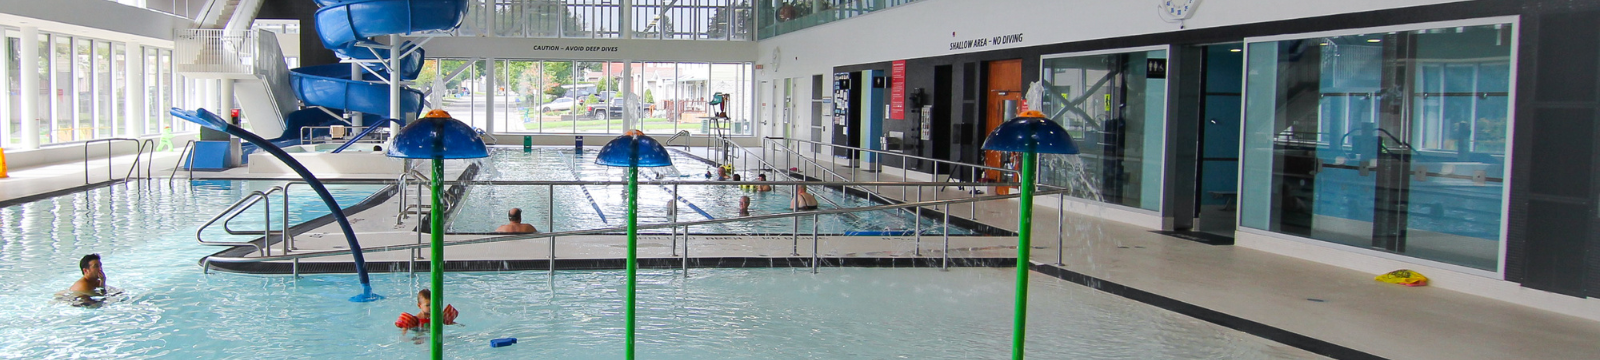 South Oshawa Community Centre pool